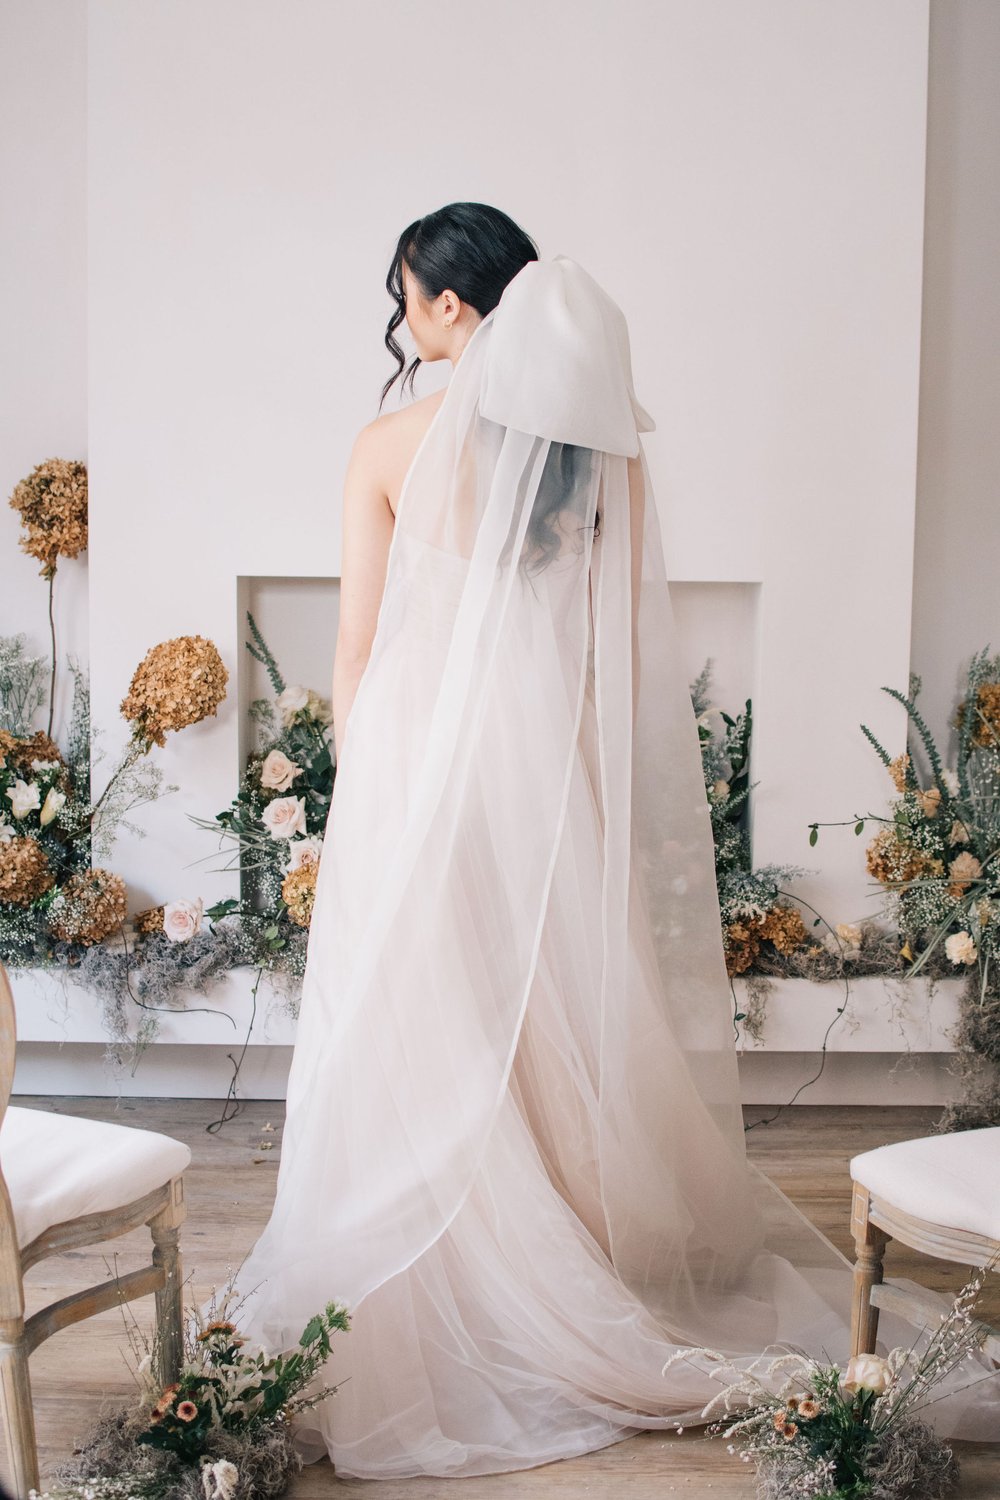 Chic wedding veil worn by bride on her wedding day photographed by Toronto wedding photographers, Ugo Photography